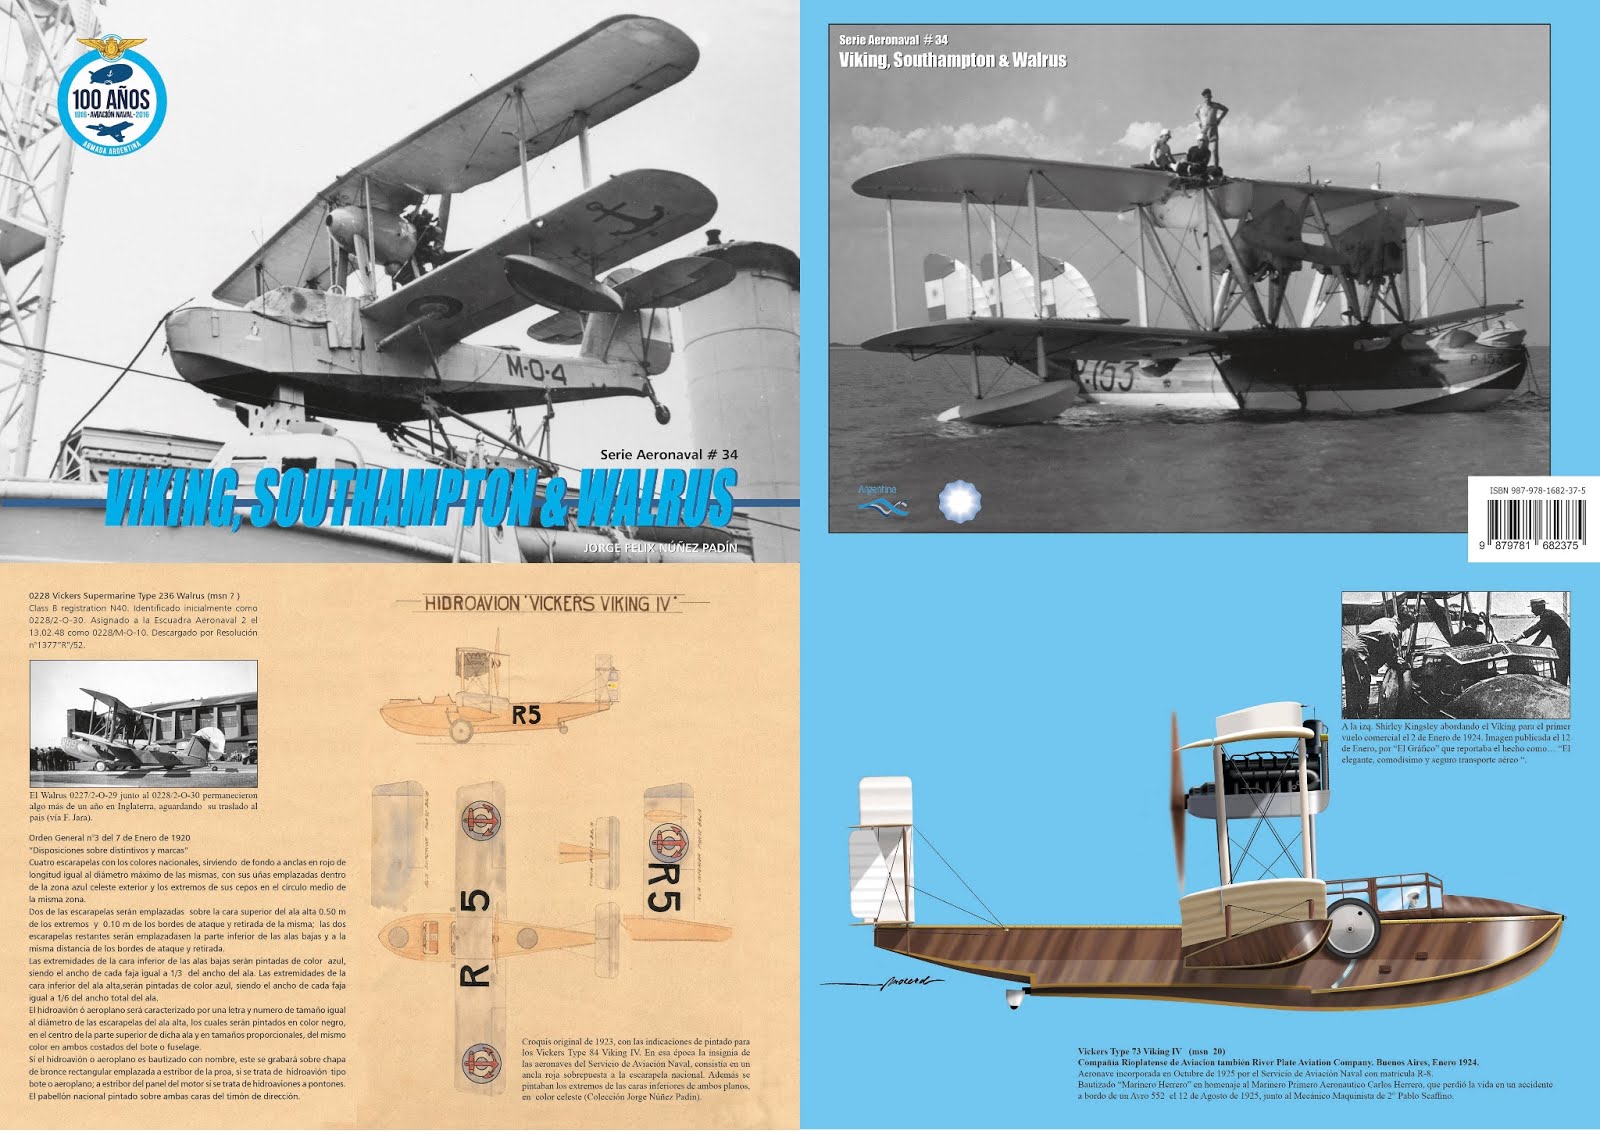 Serie Aeronaval N°34 “Viking, Southampton & Walrus”